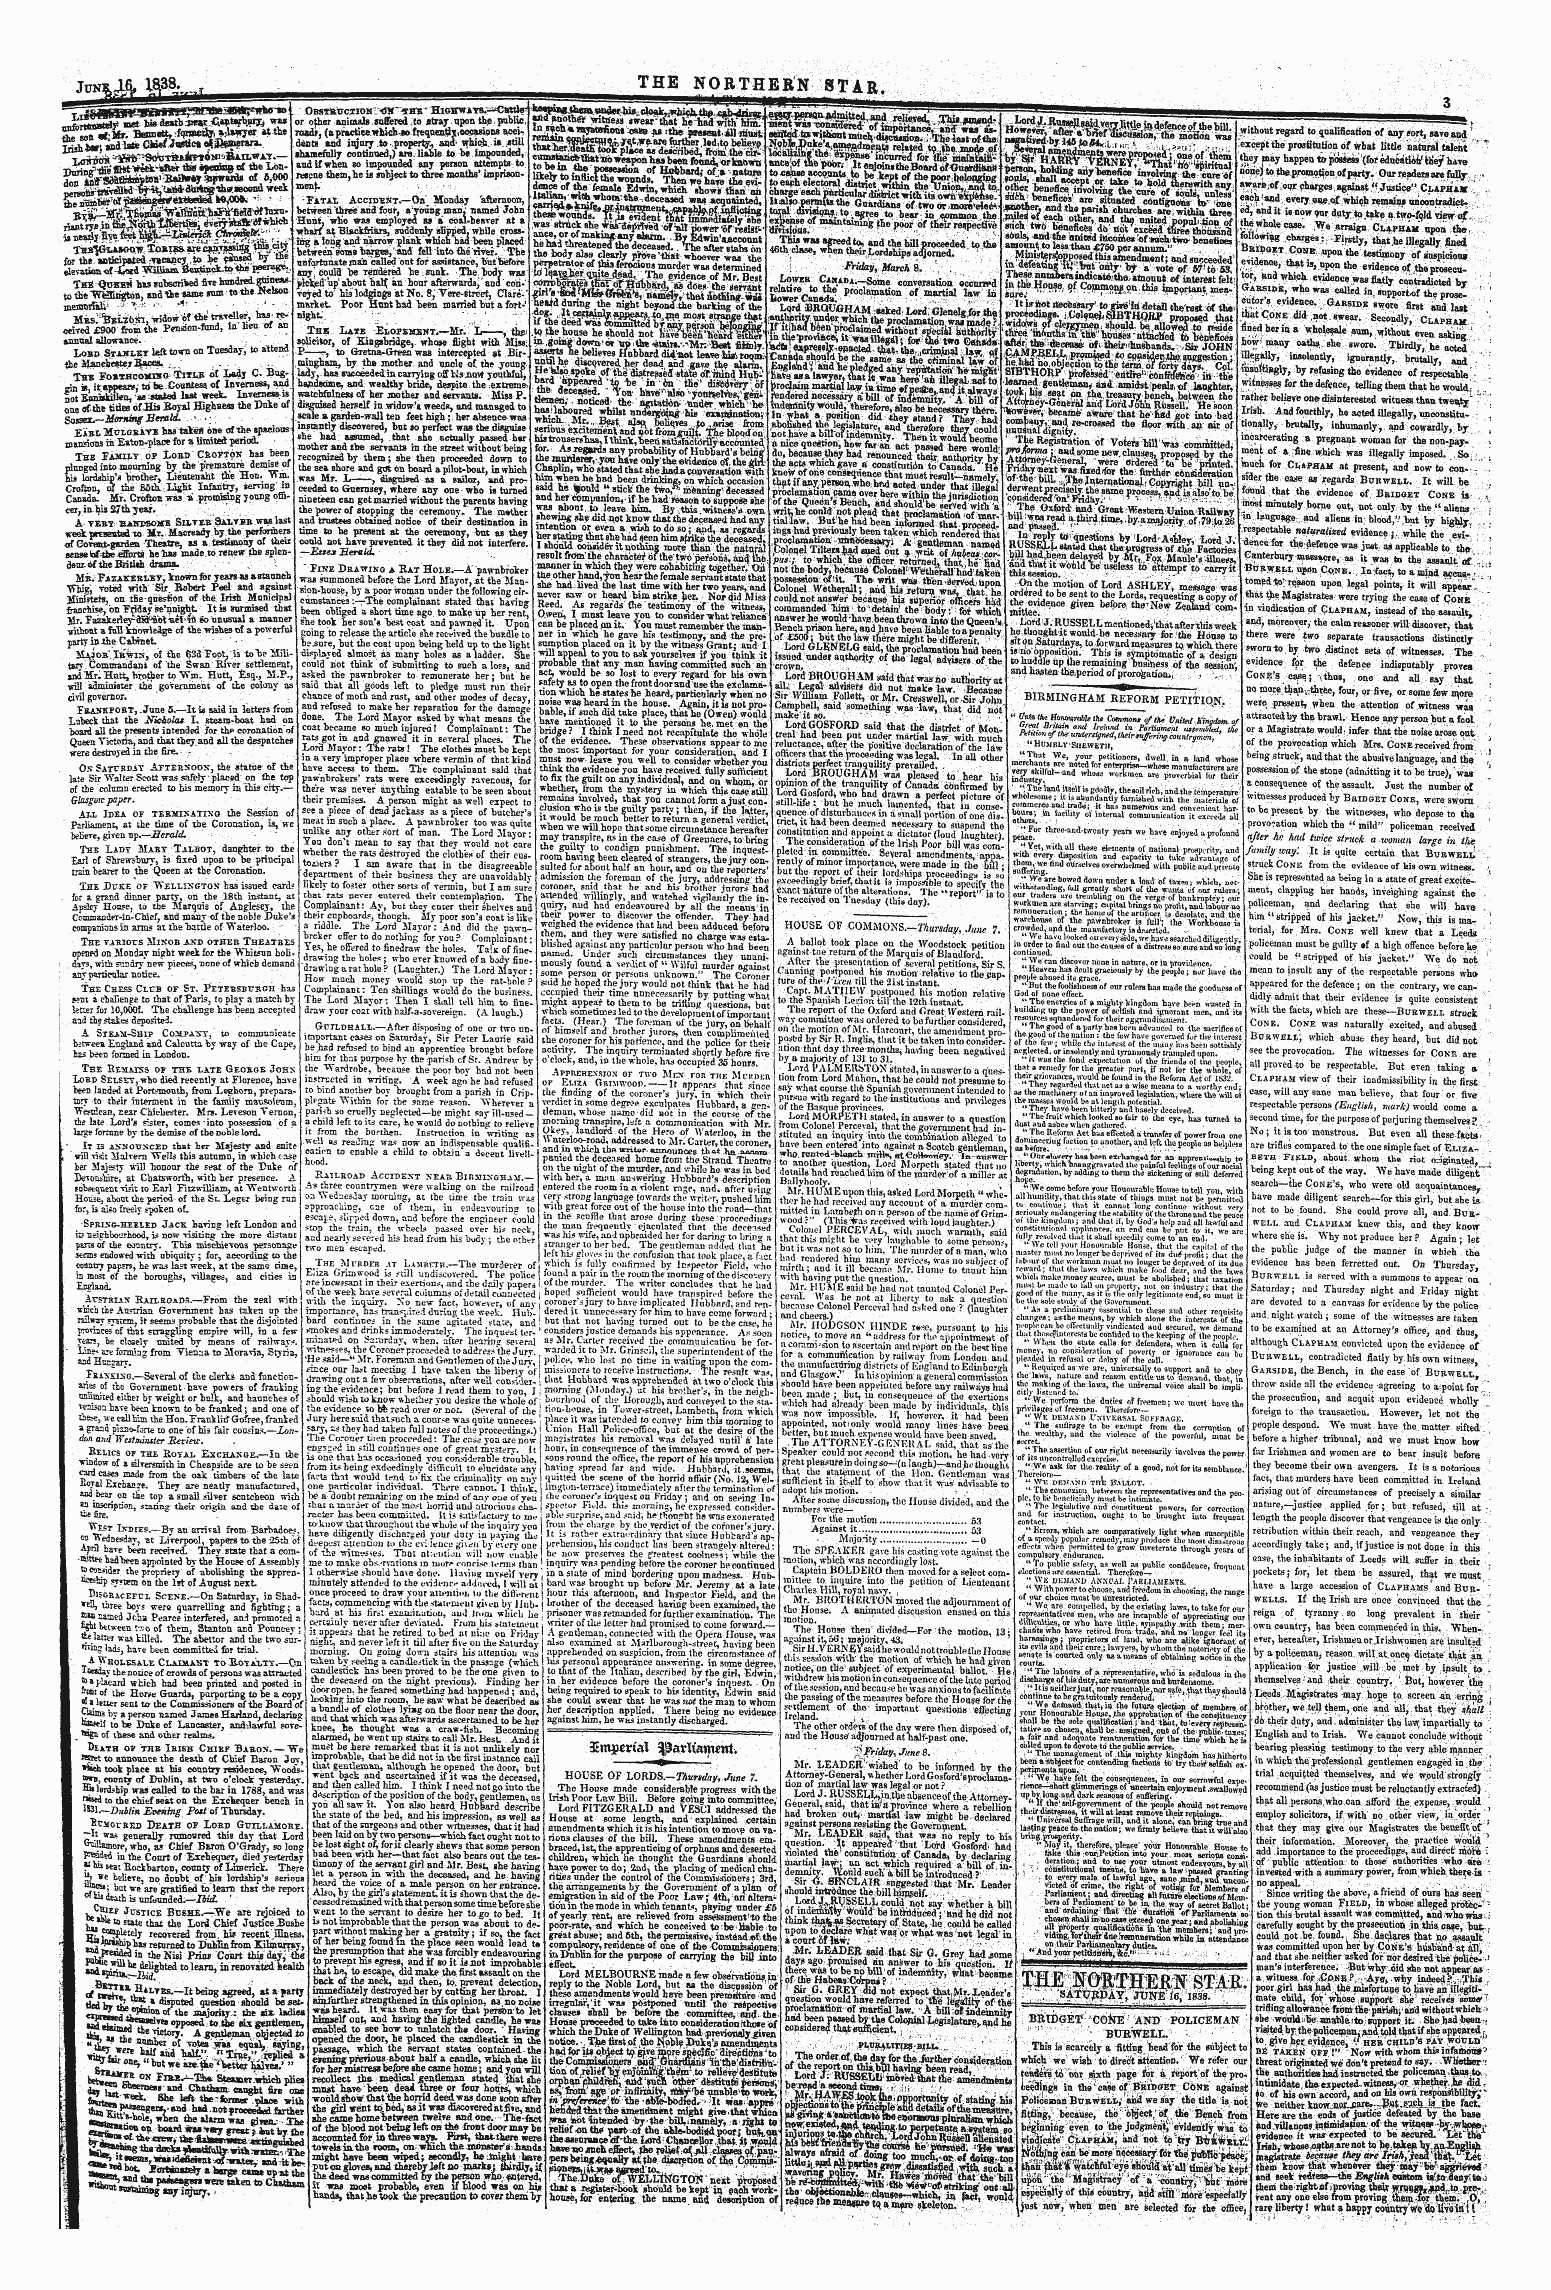 Northern Star (1837-1852): jS F Y, 1st edition - 3em£Max A^Atkatncnt